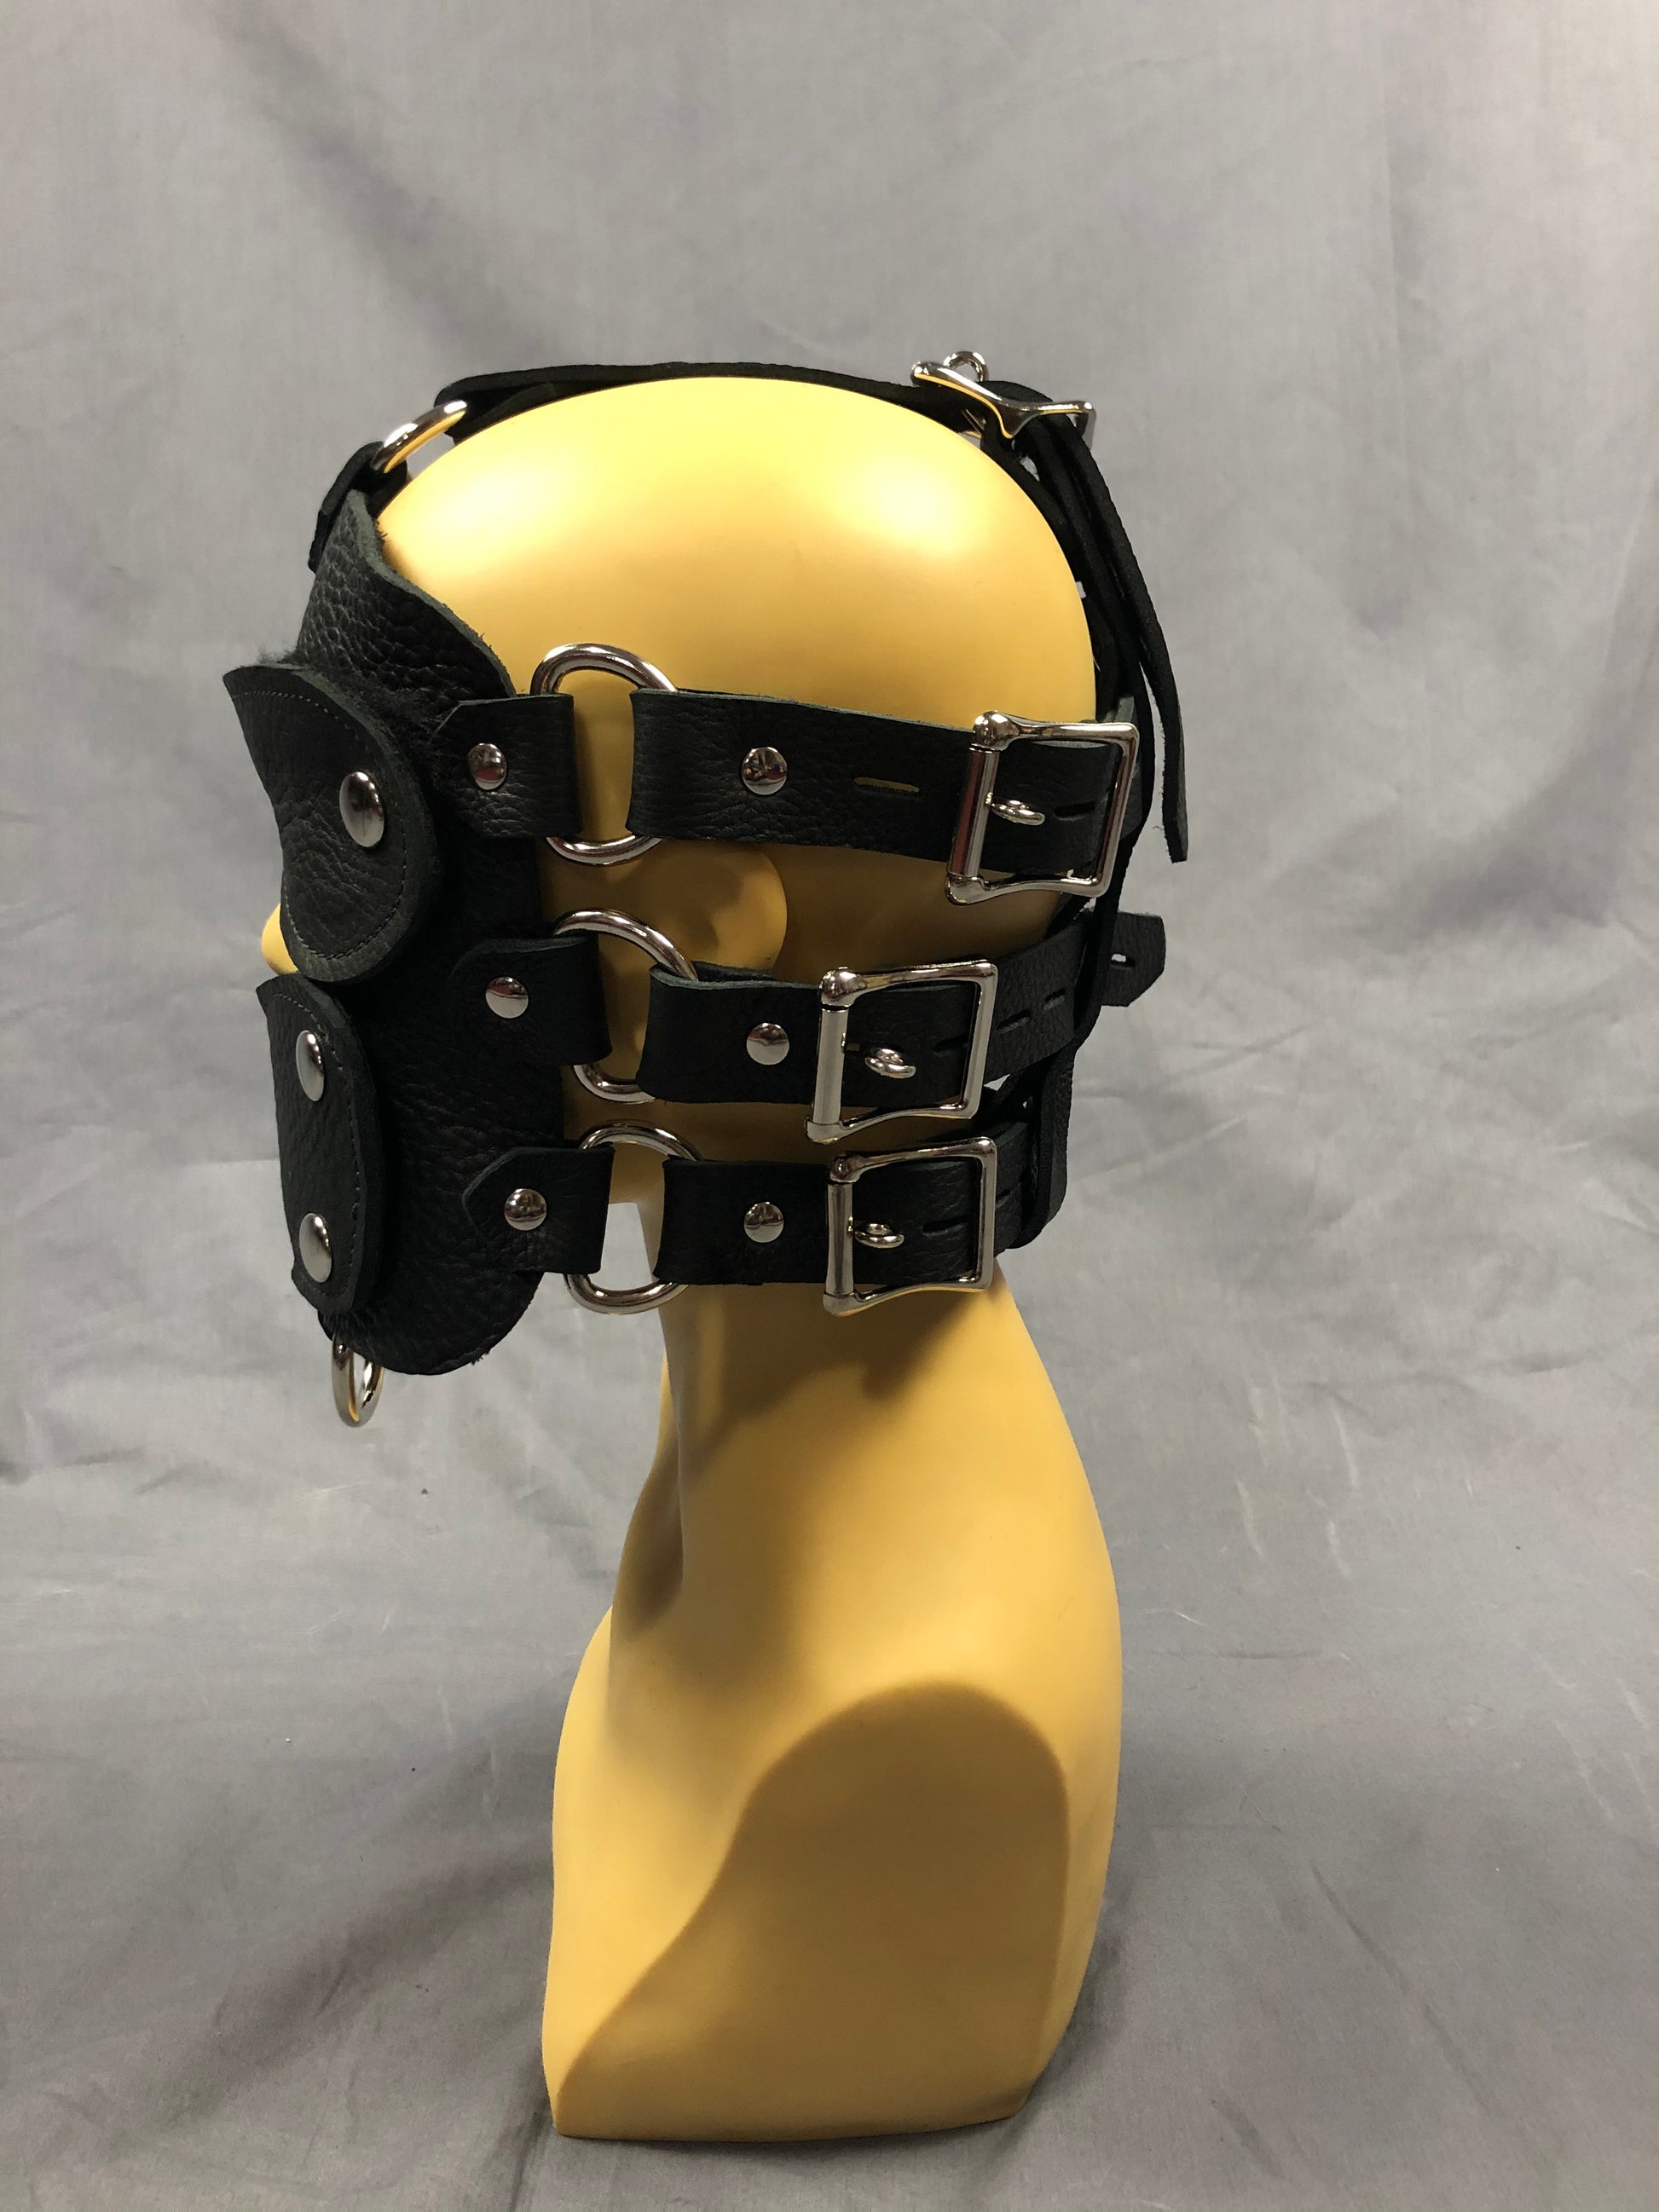 Side buckle view of black bullhide head harness.